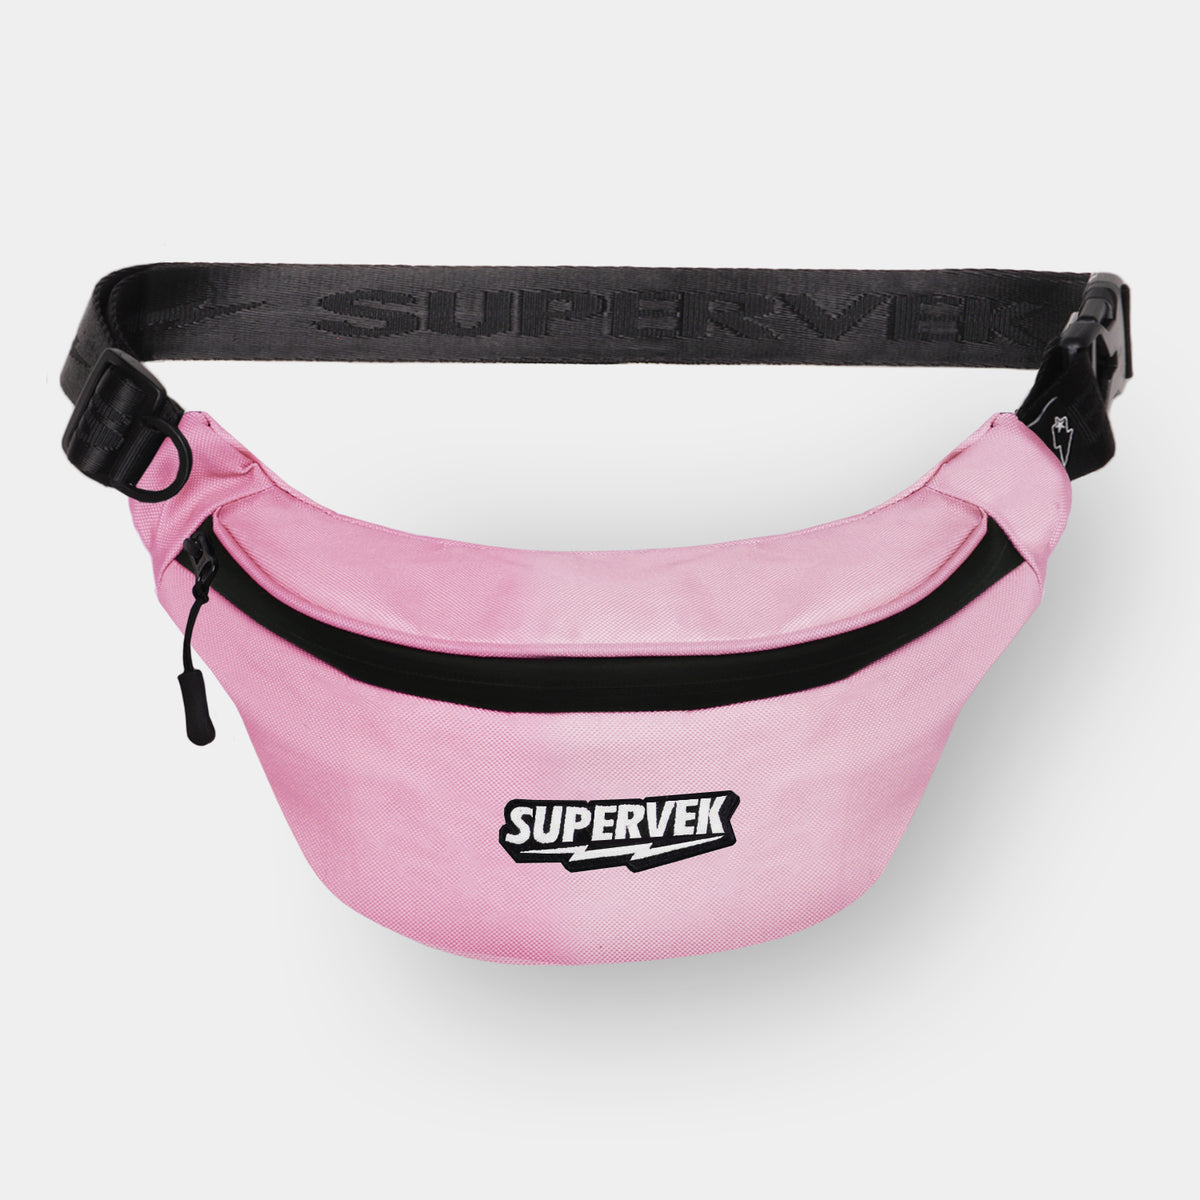 Supervek Crossbody Slinger - Candycrush Pink - Urban Functional Fanny Hip Bag for Everyday Essentials